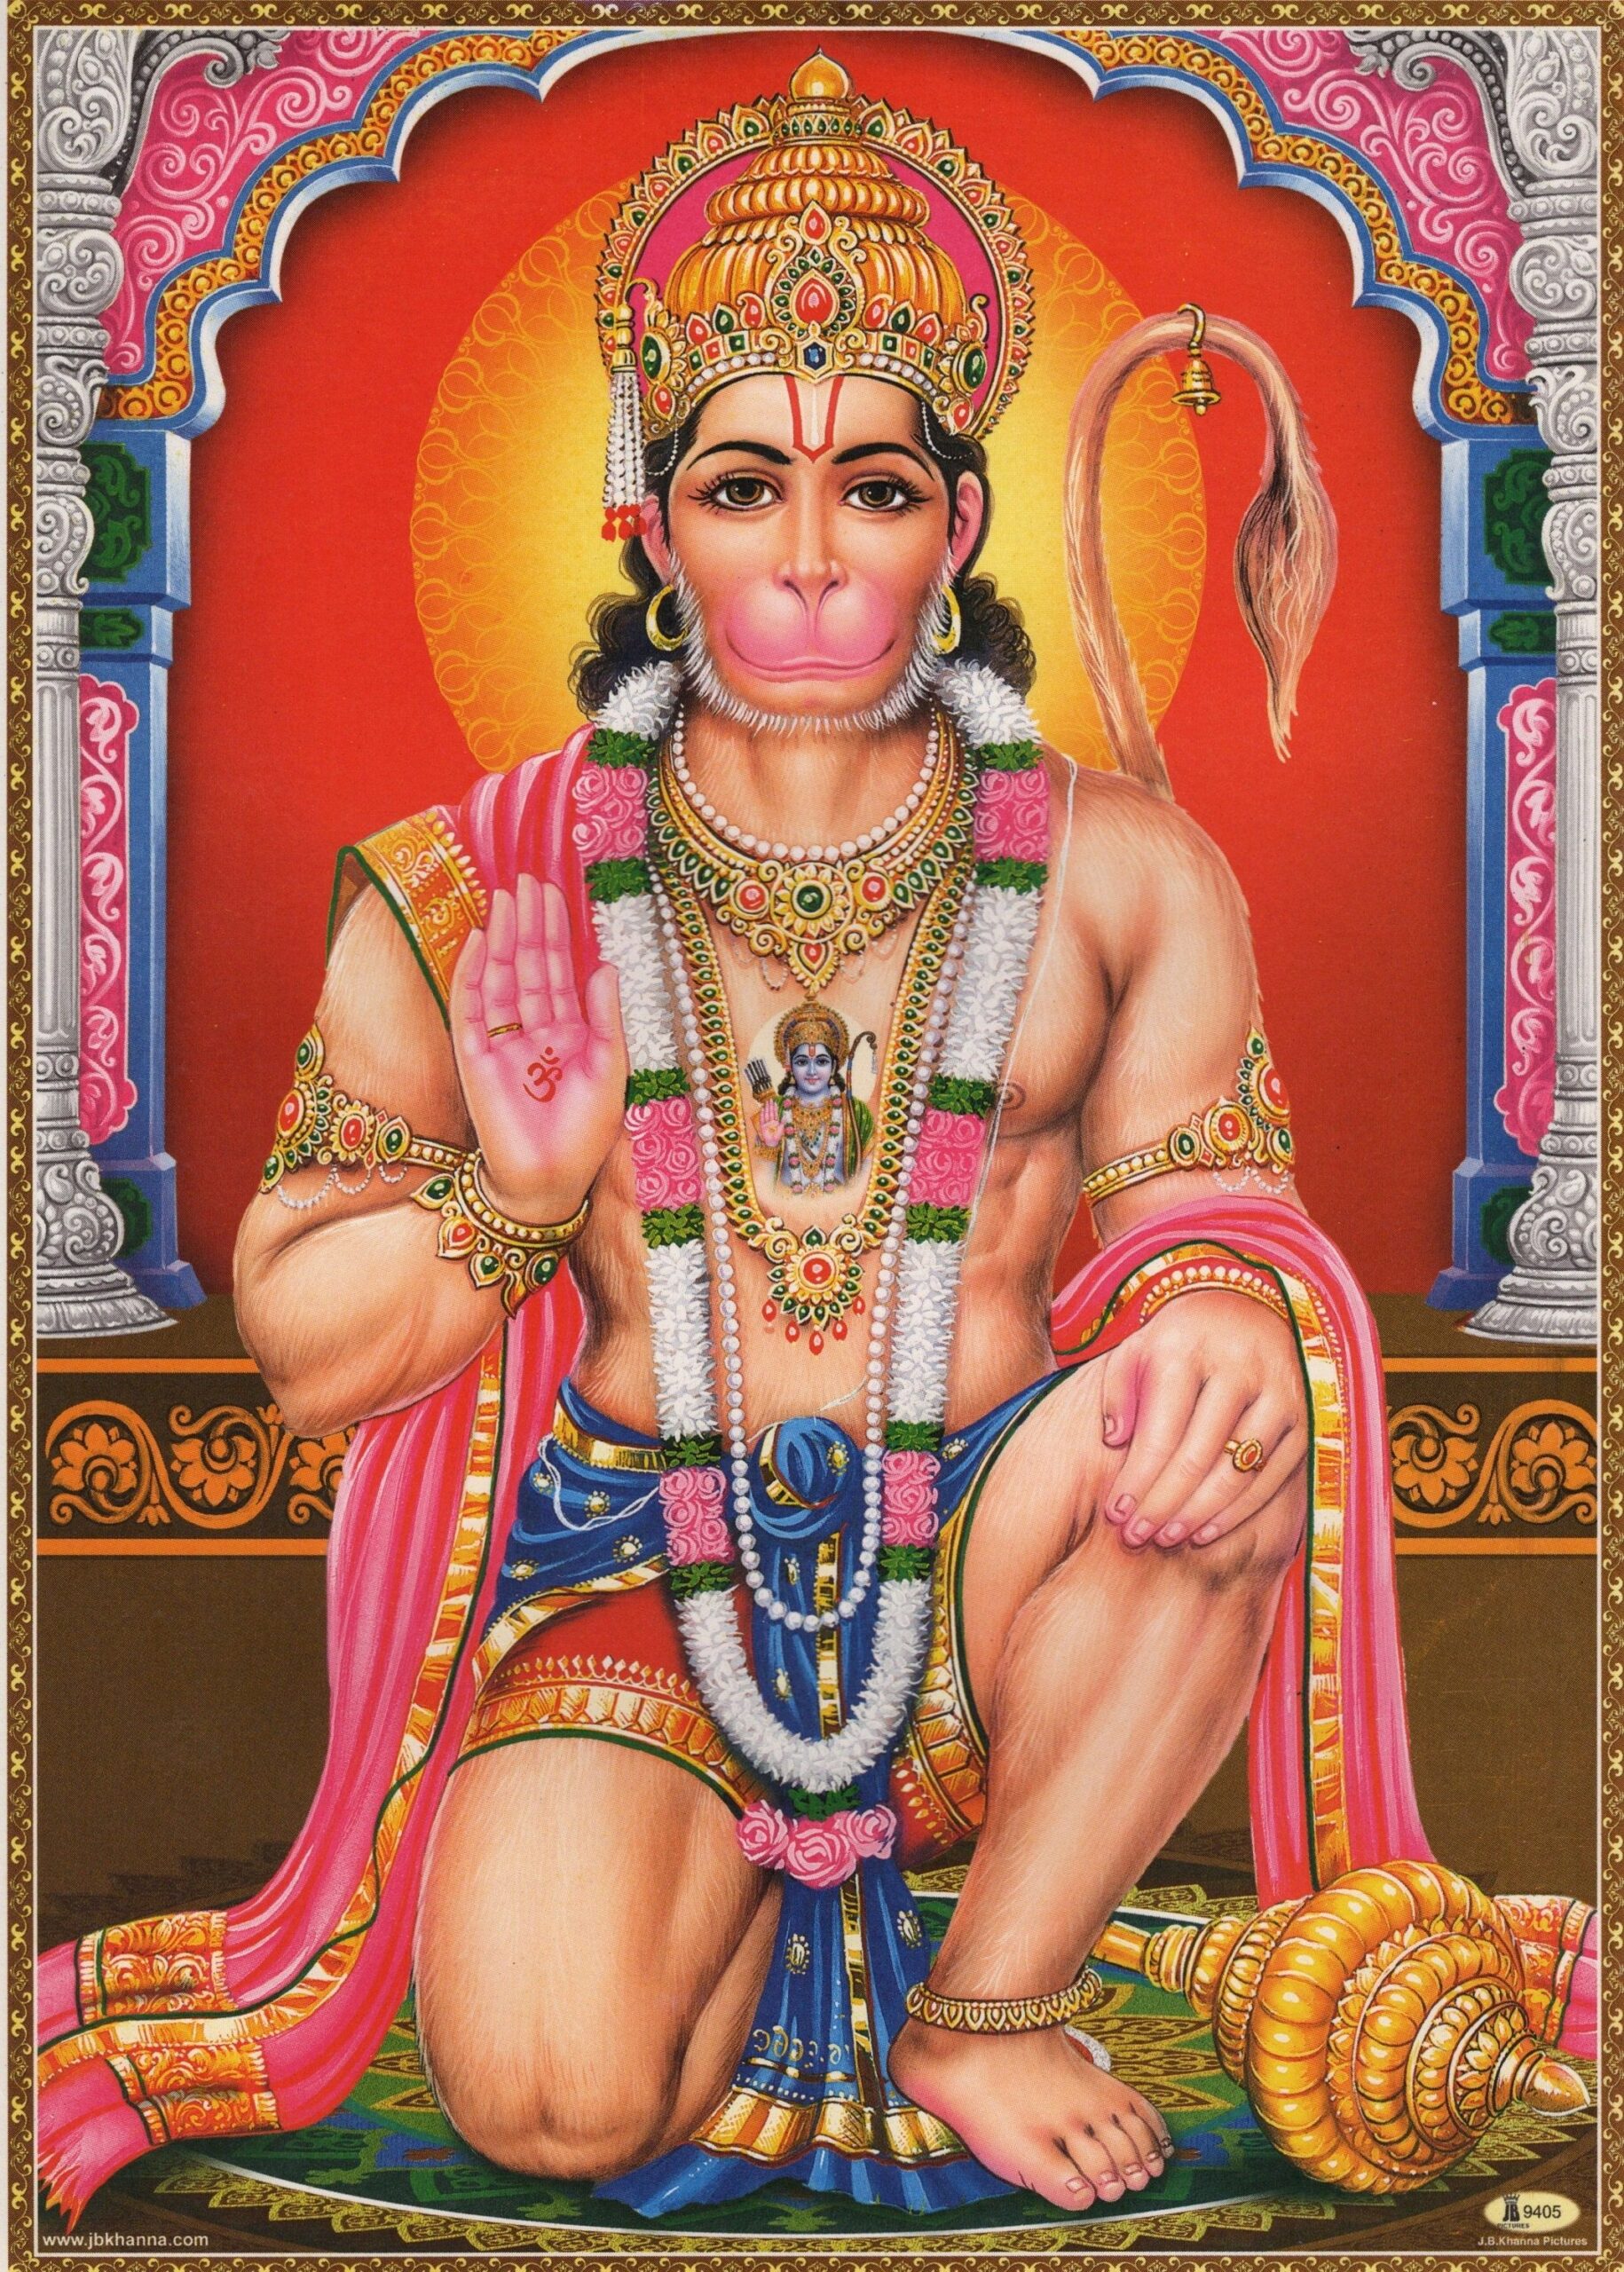 Hanuman ... Large Vintage-style Indian Hindu devotional poster print